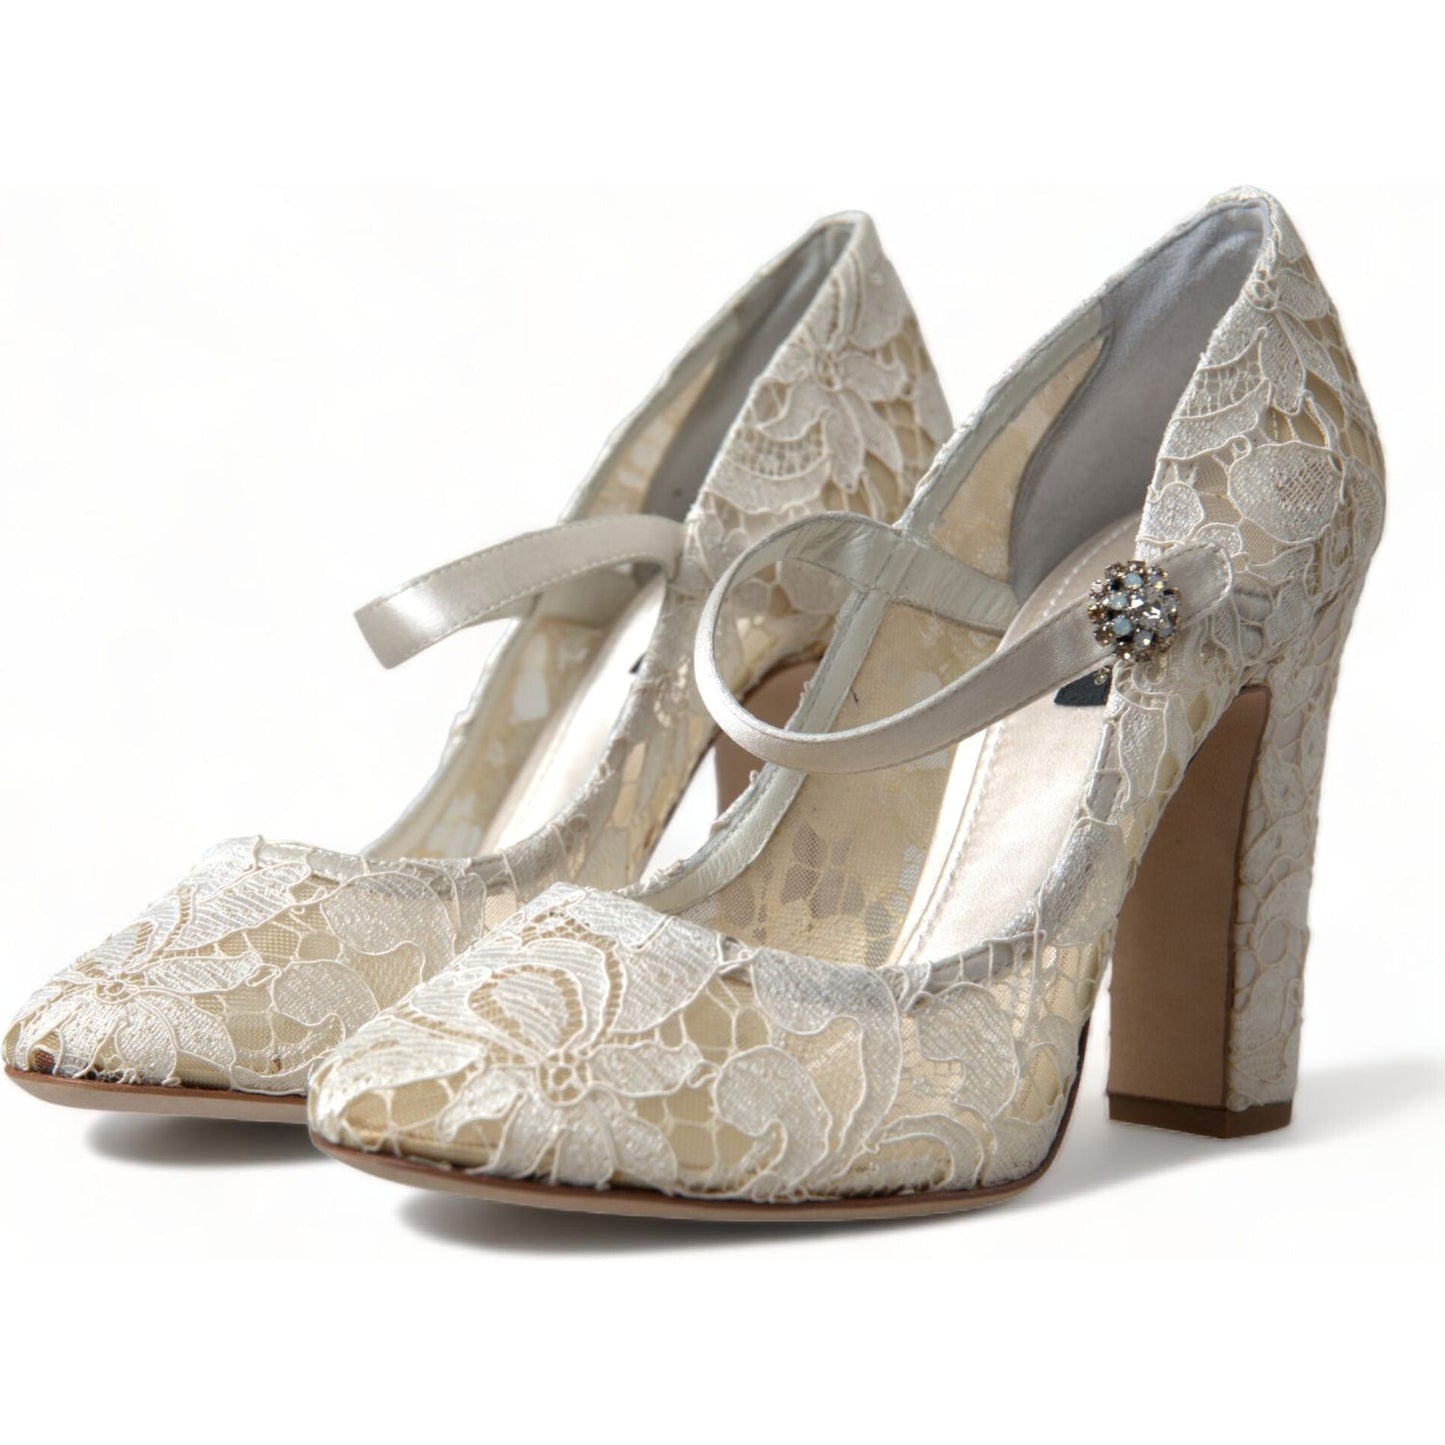 Dolce & Gabbana Chic Lace Block Heels Sandals in Cream White white-lace-crystals-heels-sandals-shoes